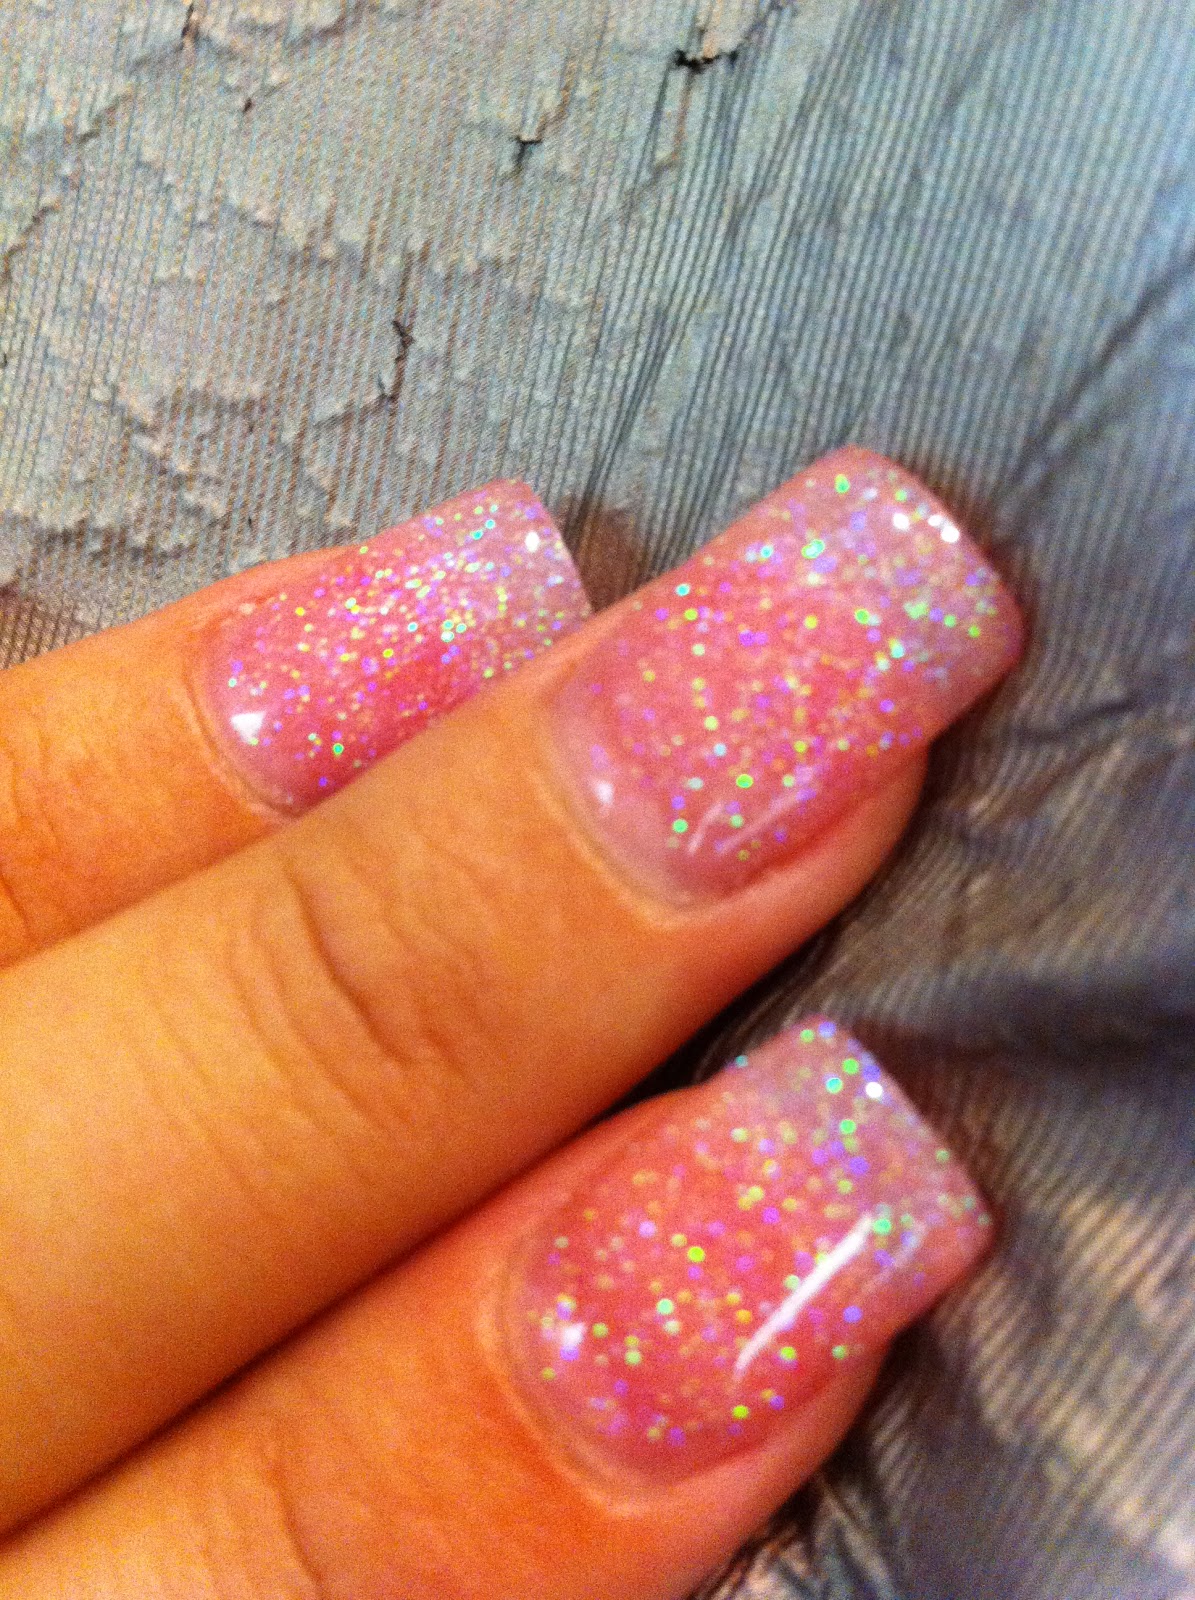 Venus nail spa in Rowlett, TX is now doing all glitter nails